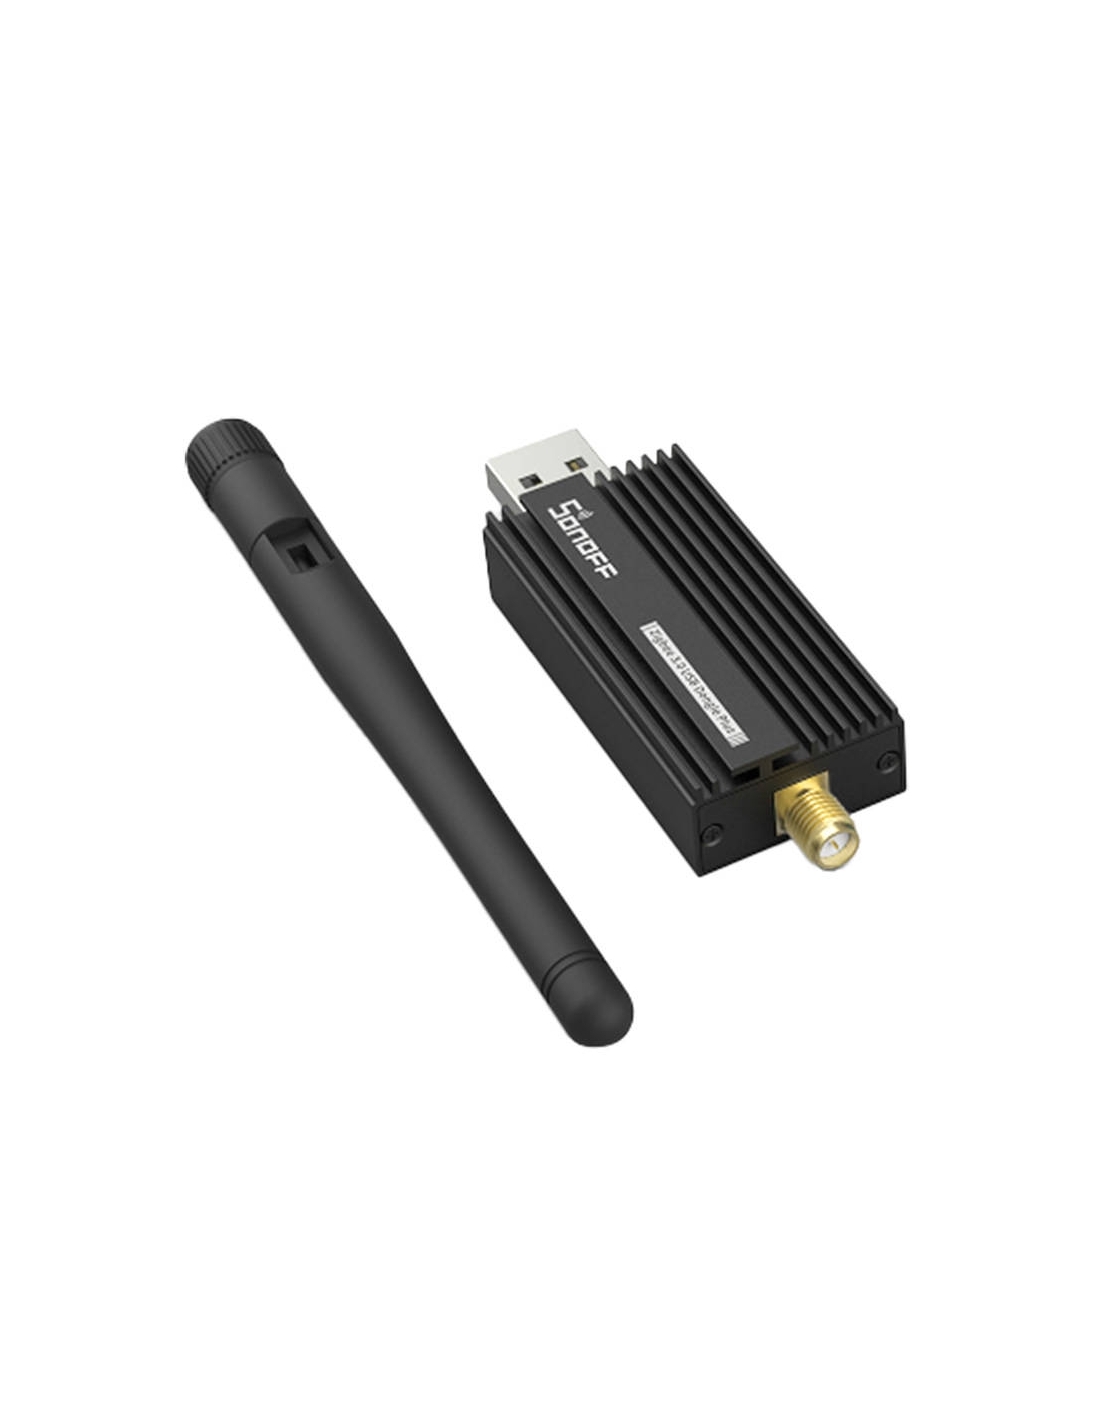 SONOFF Zigbee 3.0 Bridge Gateway USB Dongle Plus-E Universal Smart Home  Stick